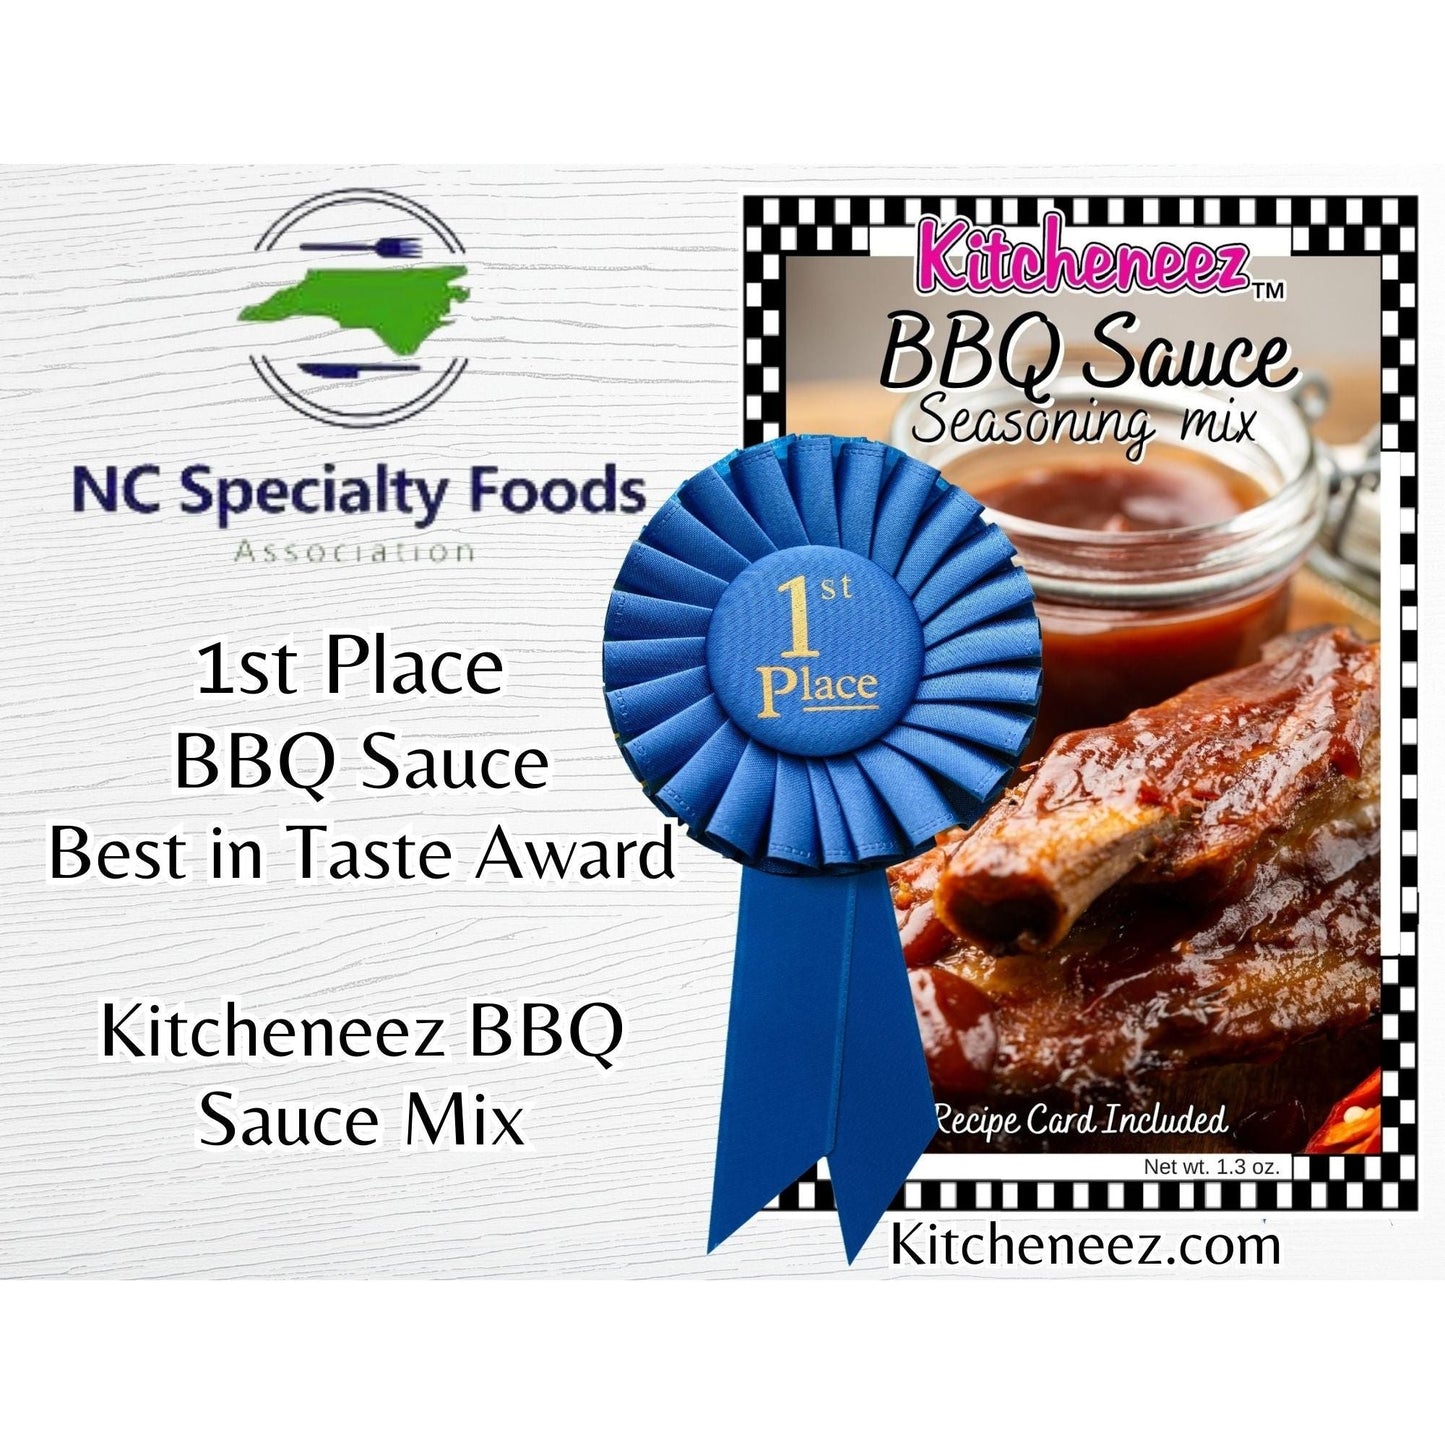 Our Prize Winning BBQ Sauce mix - Kitcheneez Mixes & More!